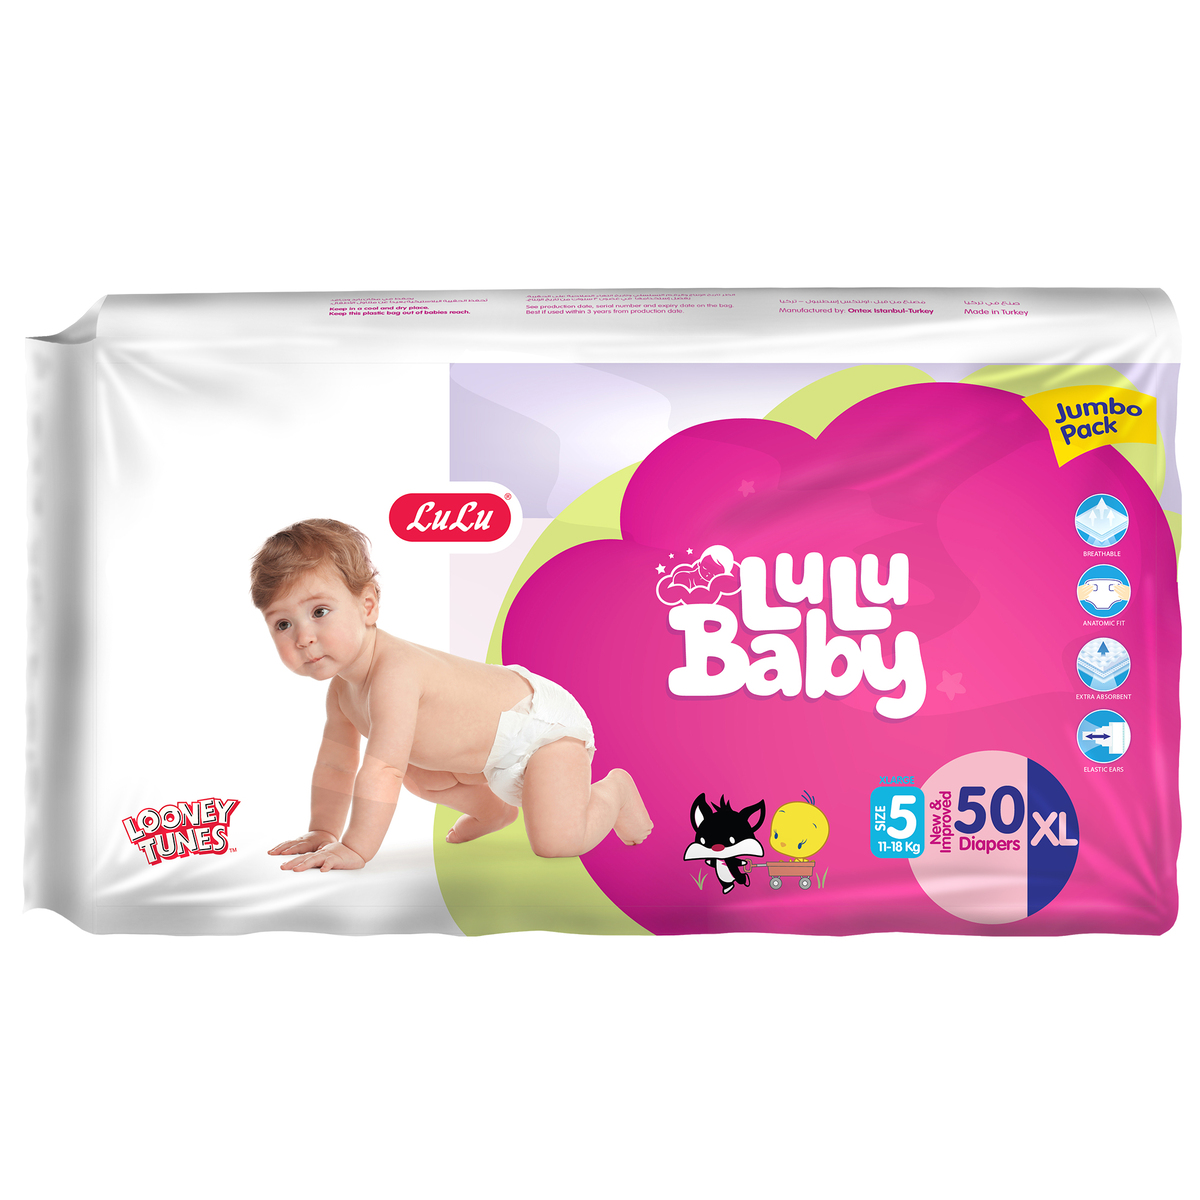 LuLu Baby Diaper Size 5 11-18kg Extra Large 50pcs